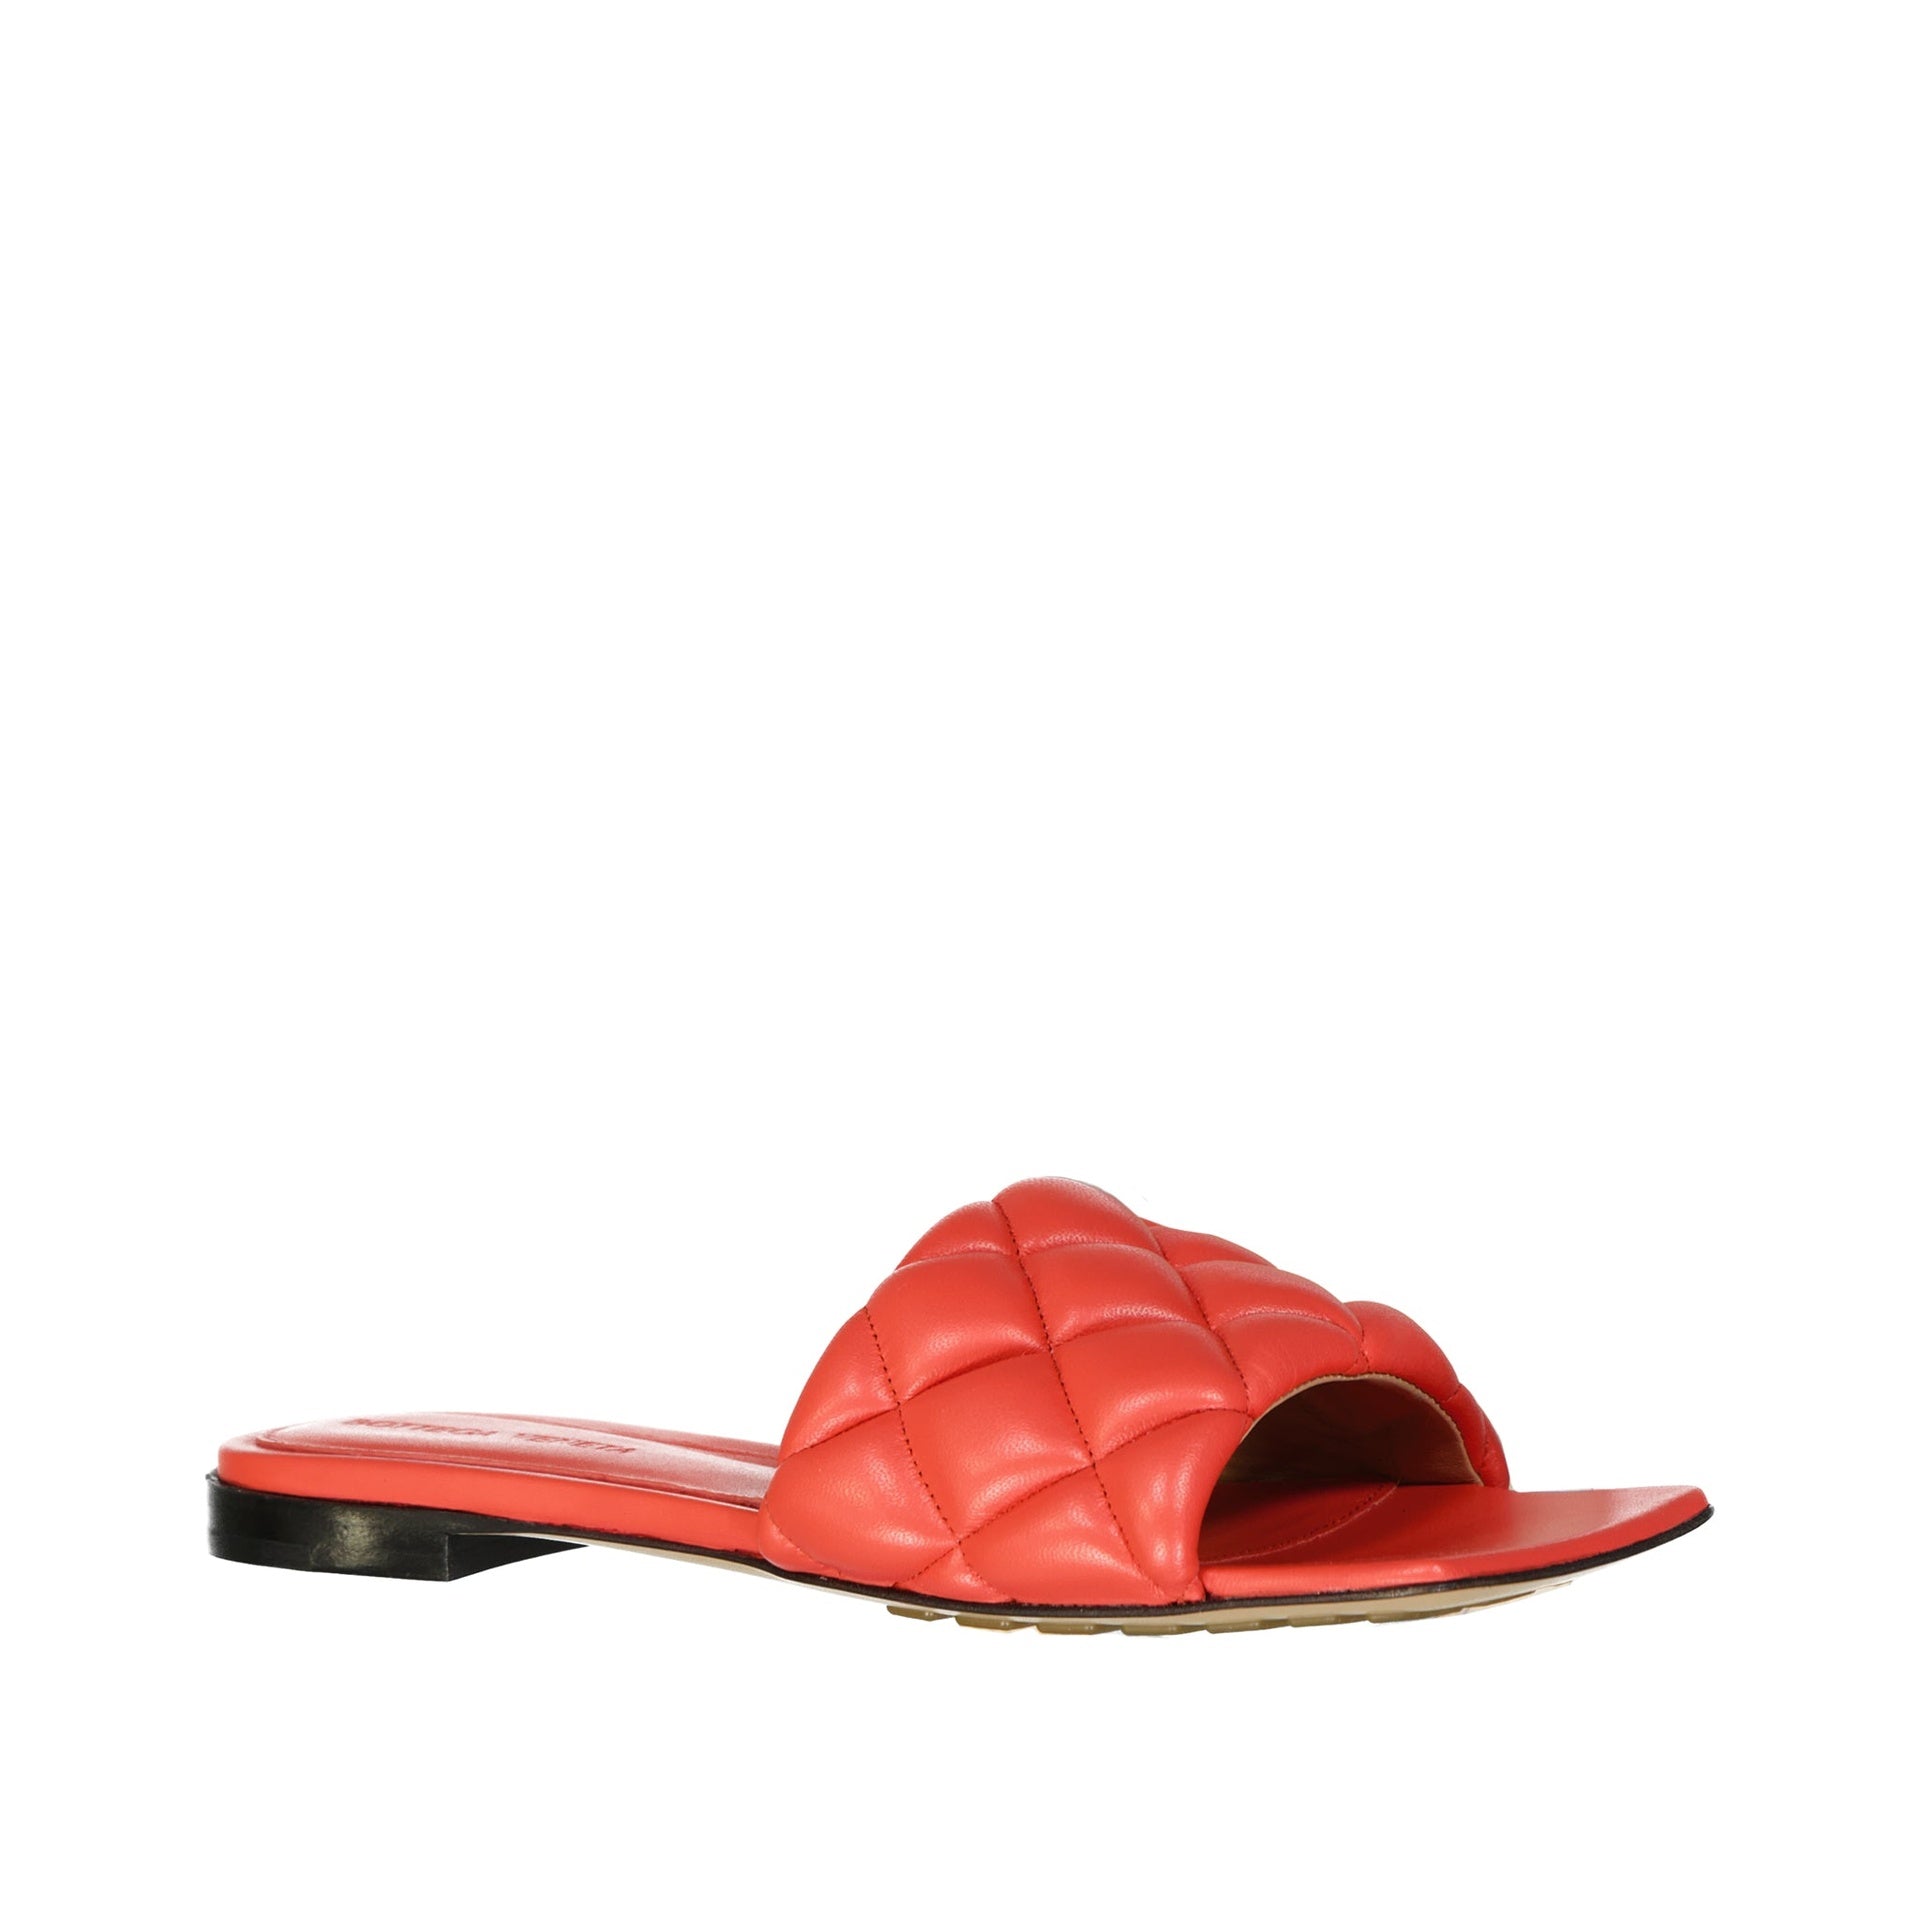 BOTTEGA VENETA-Bottega Veneta Padded Sandals-WOMEN SHOES-Outlet-Sale